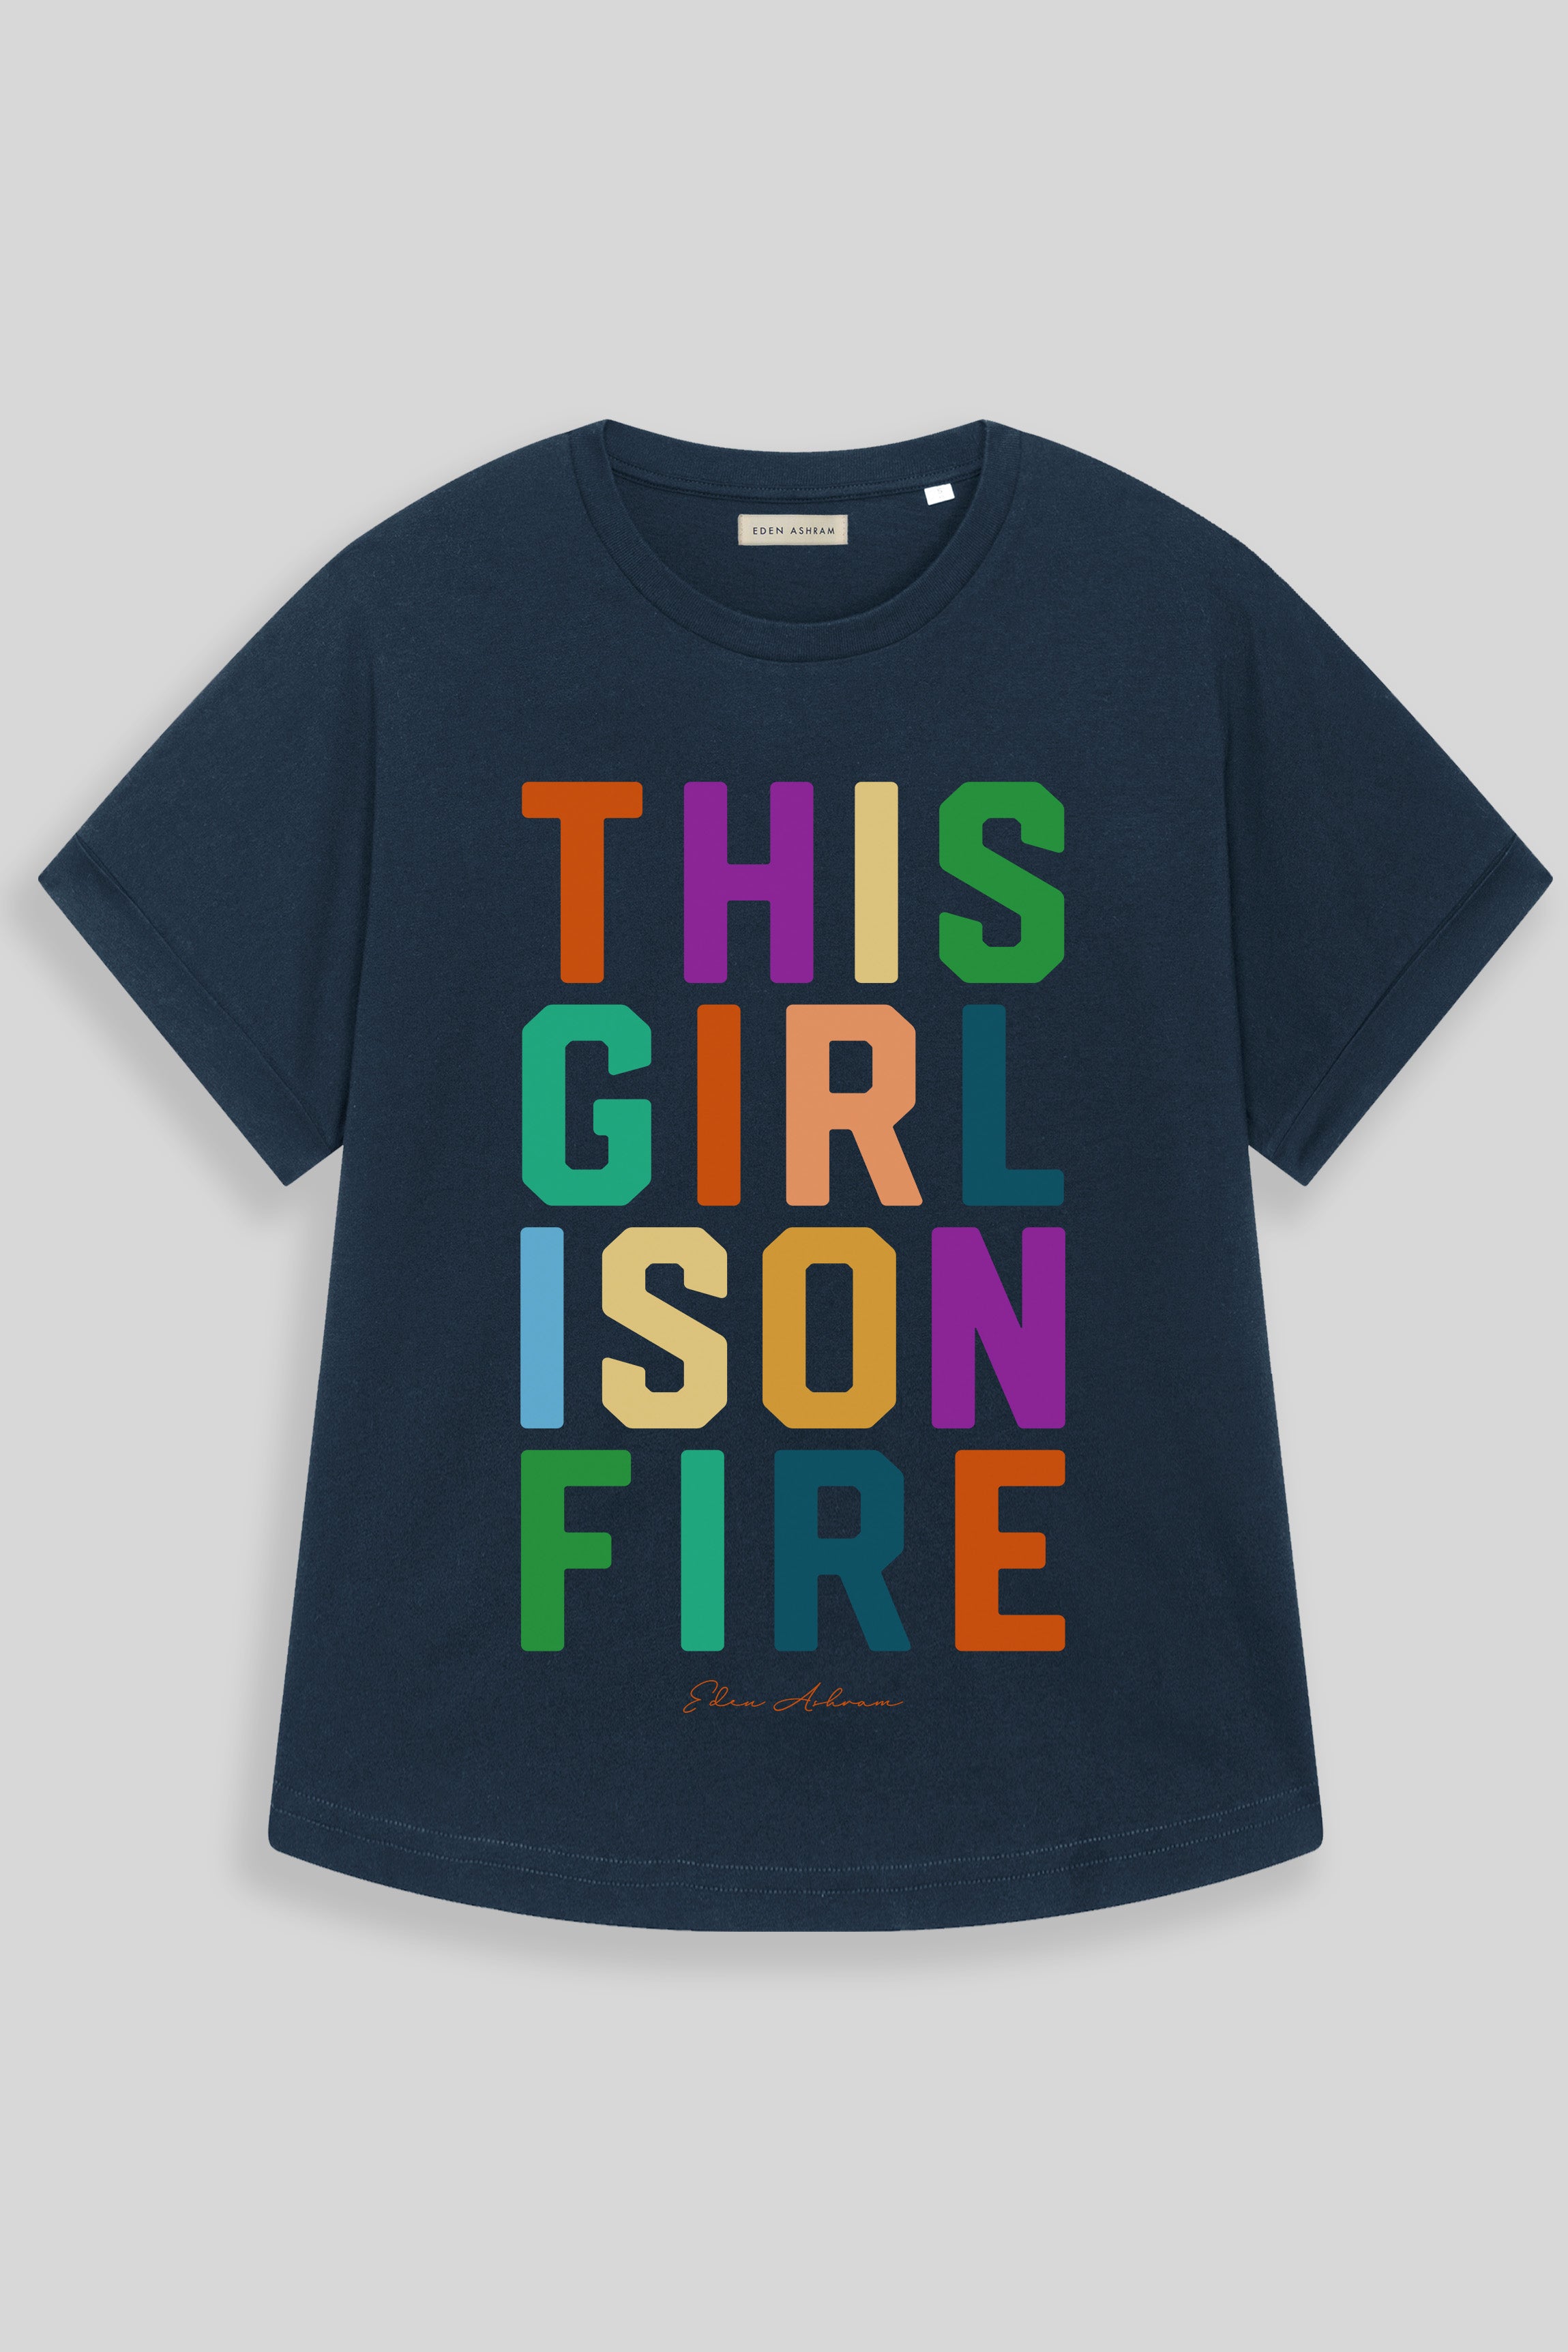 EDEN ASHRAM This Girl Is On Fire Oversized Premium Rolled Sleeve T-Shirt Navy